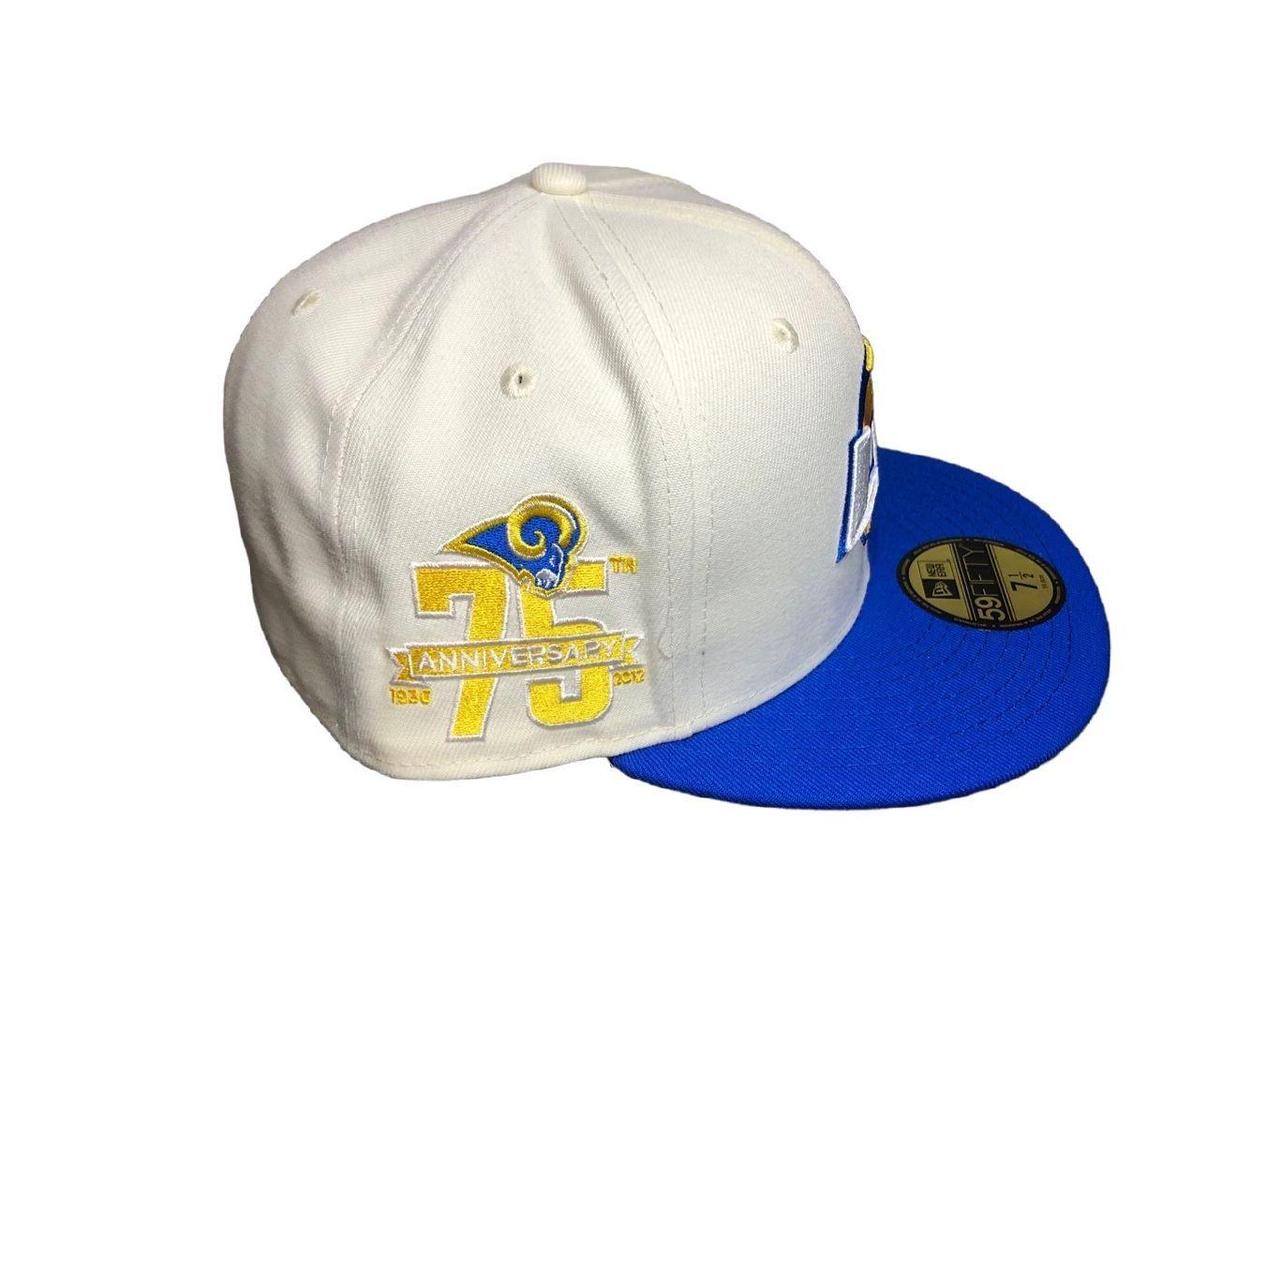 LA Rams old school Mitchell & Ness SnapBack hat. - Depop